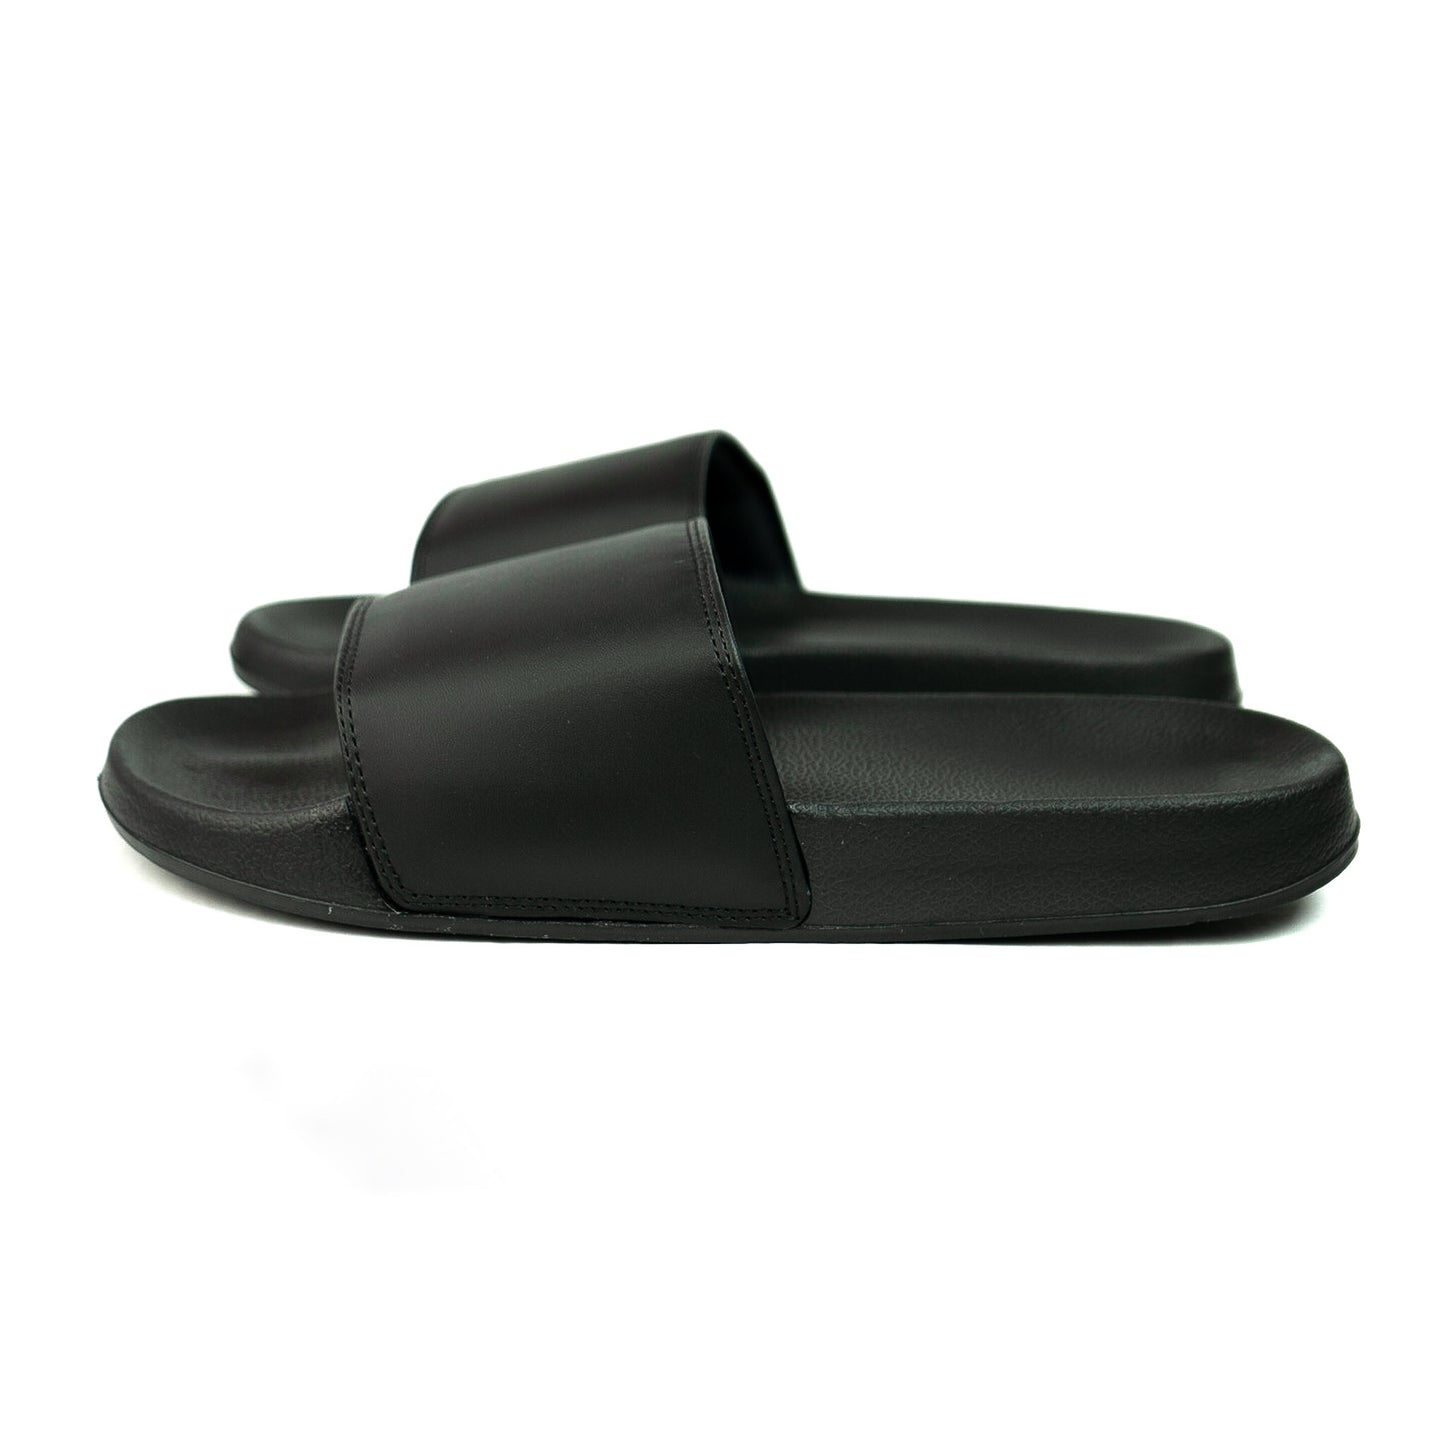 Minimalist Slides - Black - Cushioned Strap - EVA Sole - Eco-Friendly